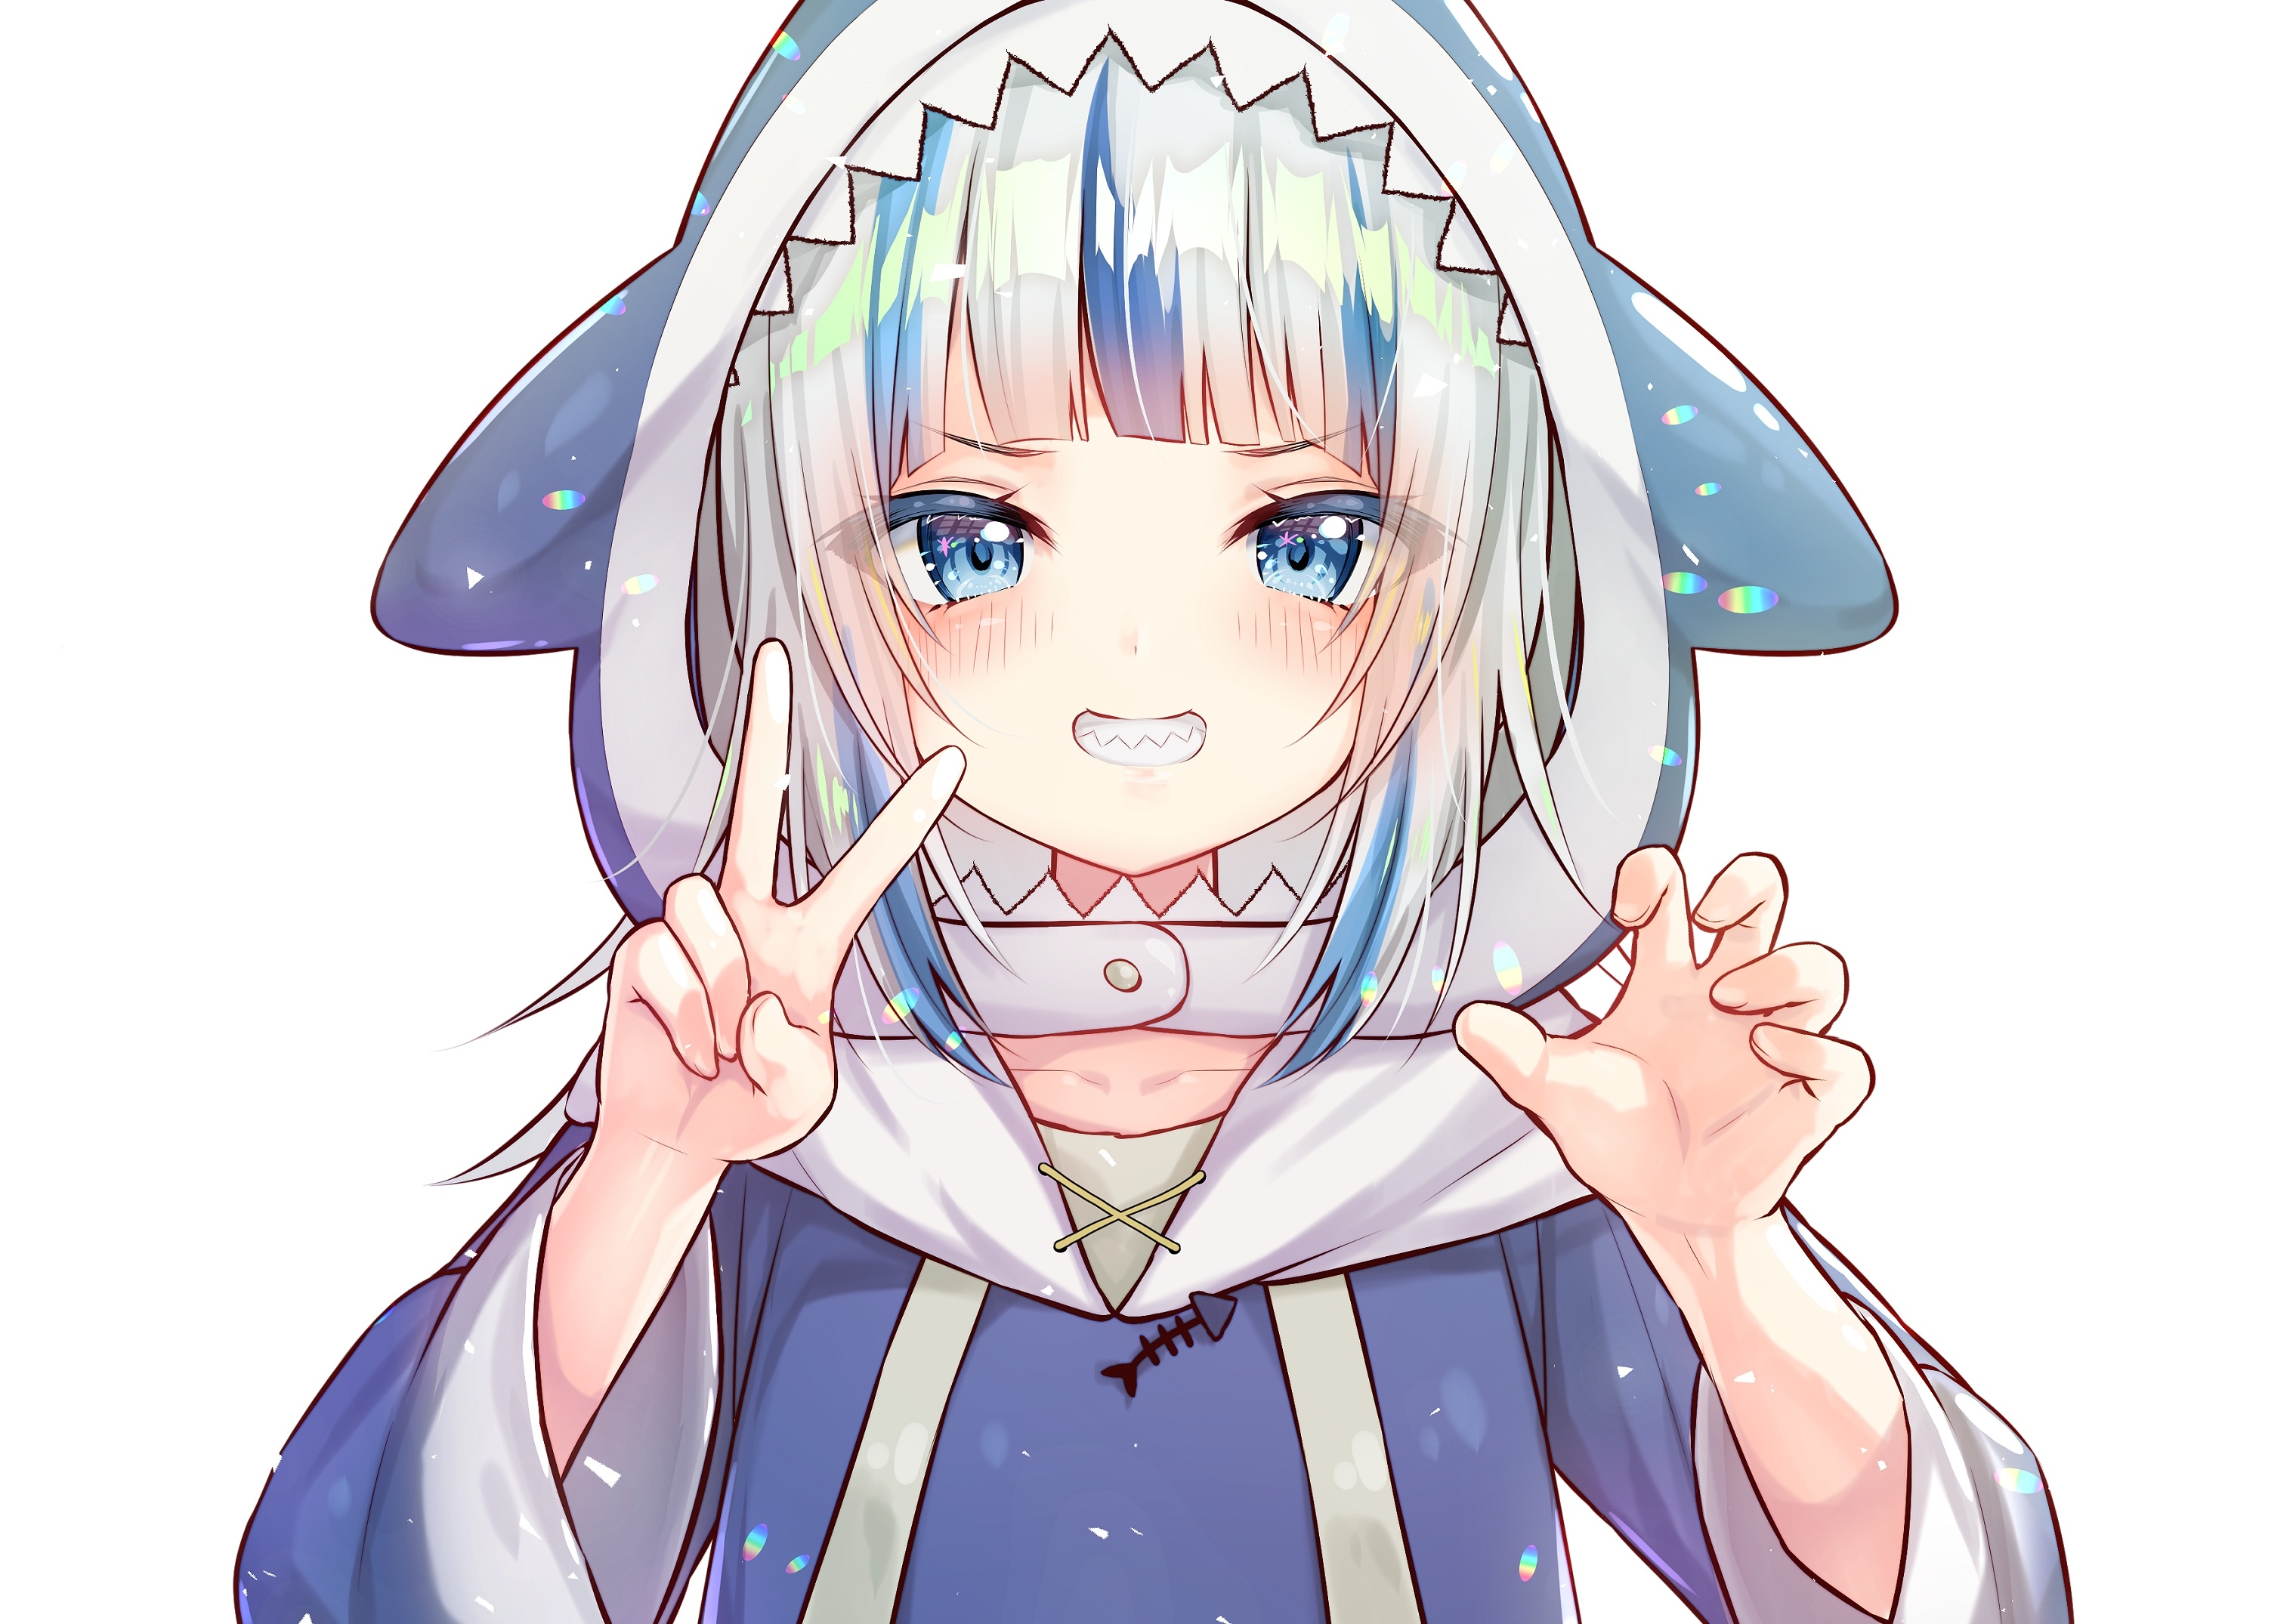 Anime 3035x2150 Gawr Gura Hololive shark multi-colored hair blue hoodie peace sign blue eyes anime girls